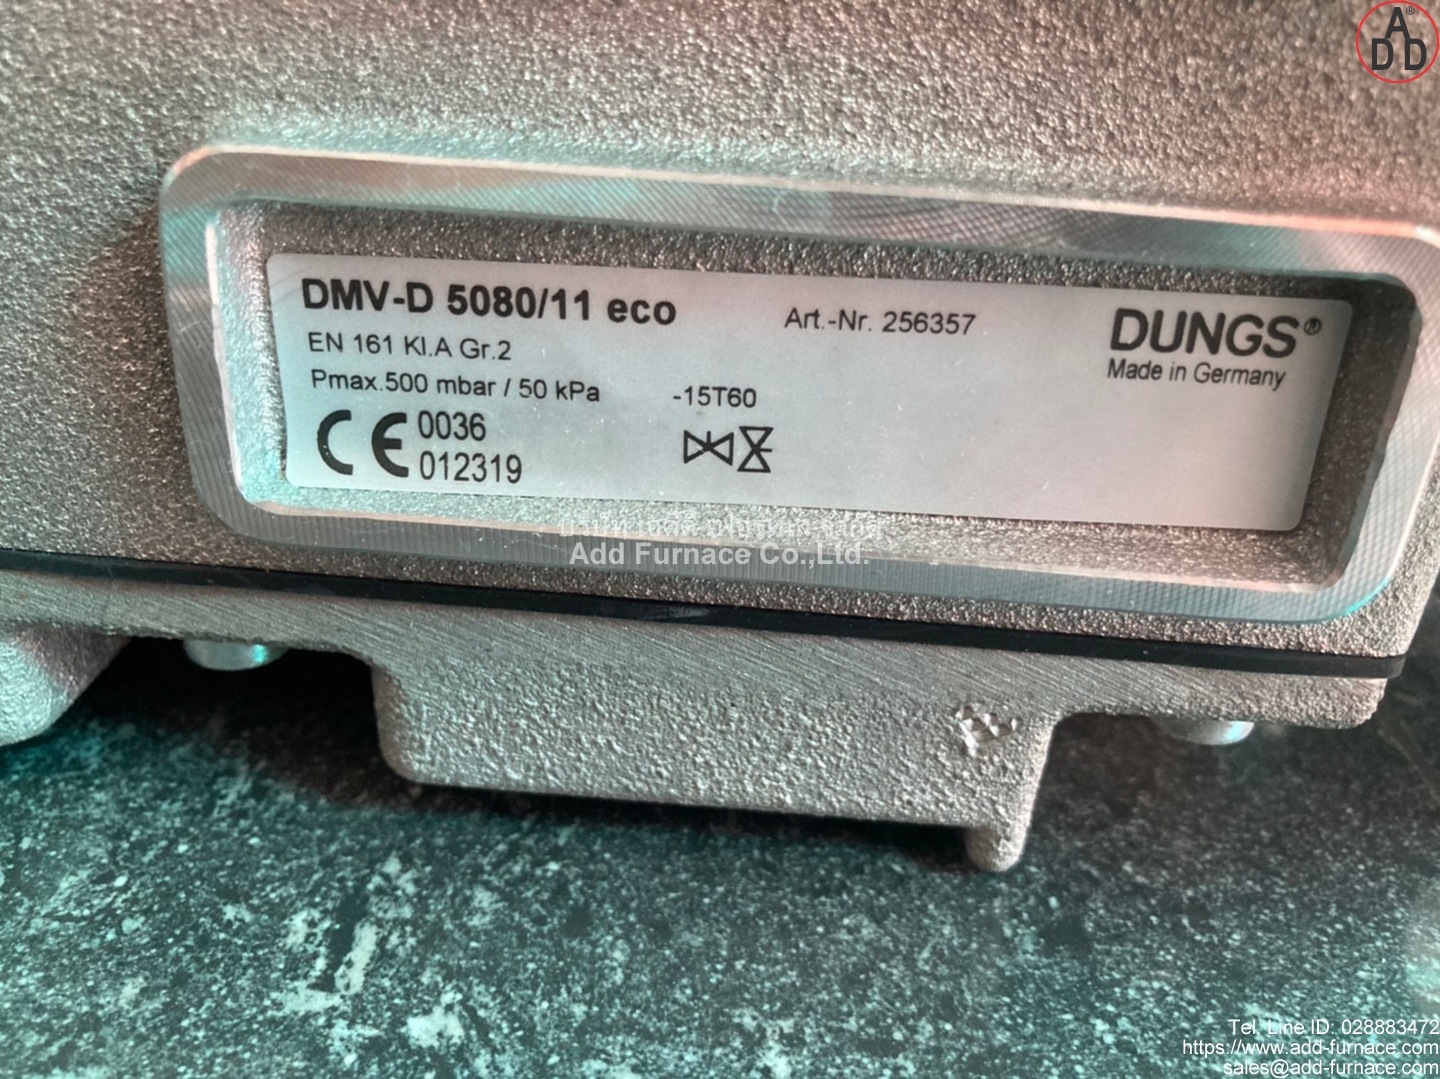 DMV-D 5080/11 eco (13)